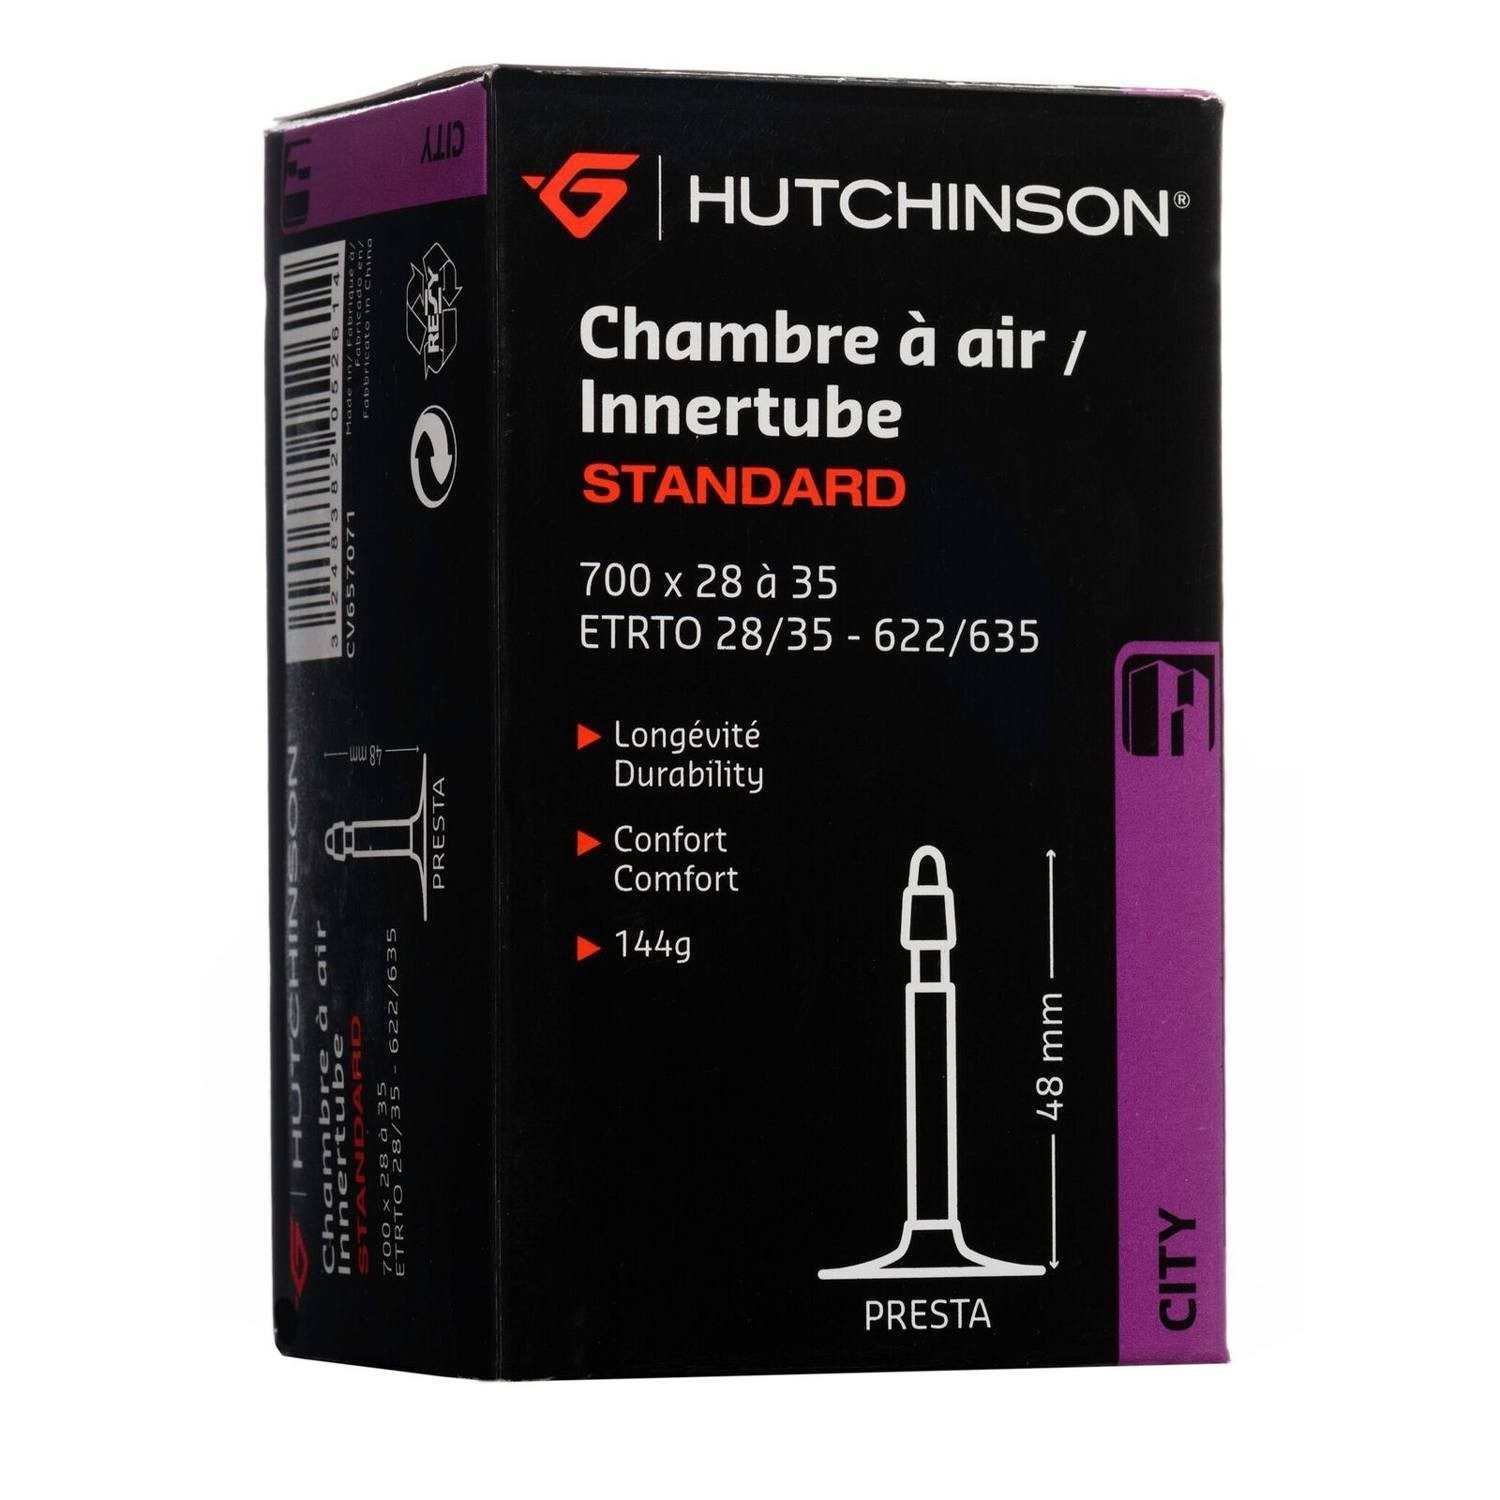 Hutchinson CHAMBRE A AIR VELO 700 x 28-35 VALVE PRESTA 48mm 144g